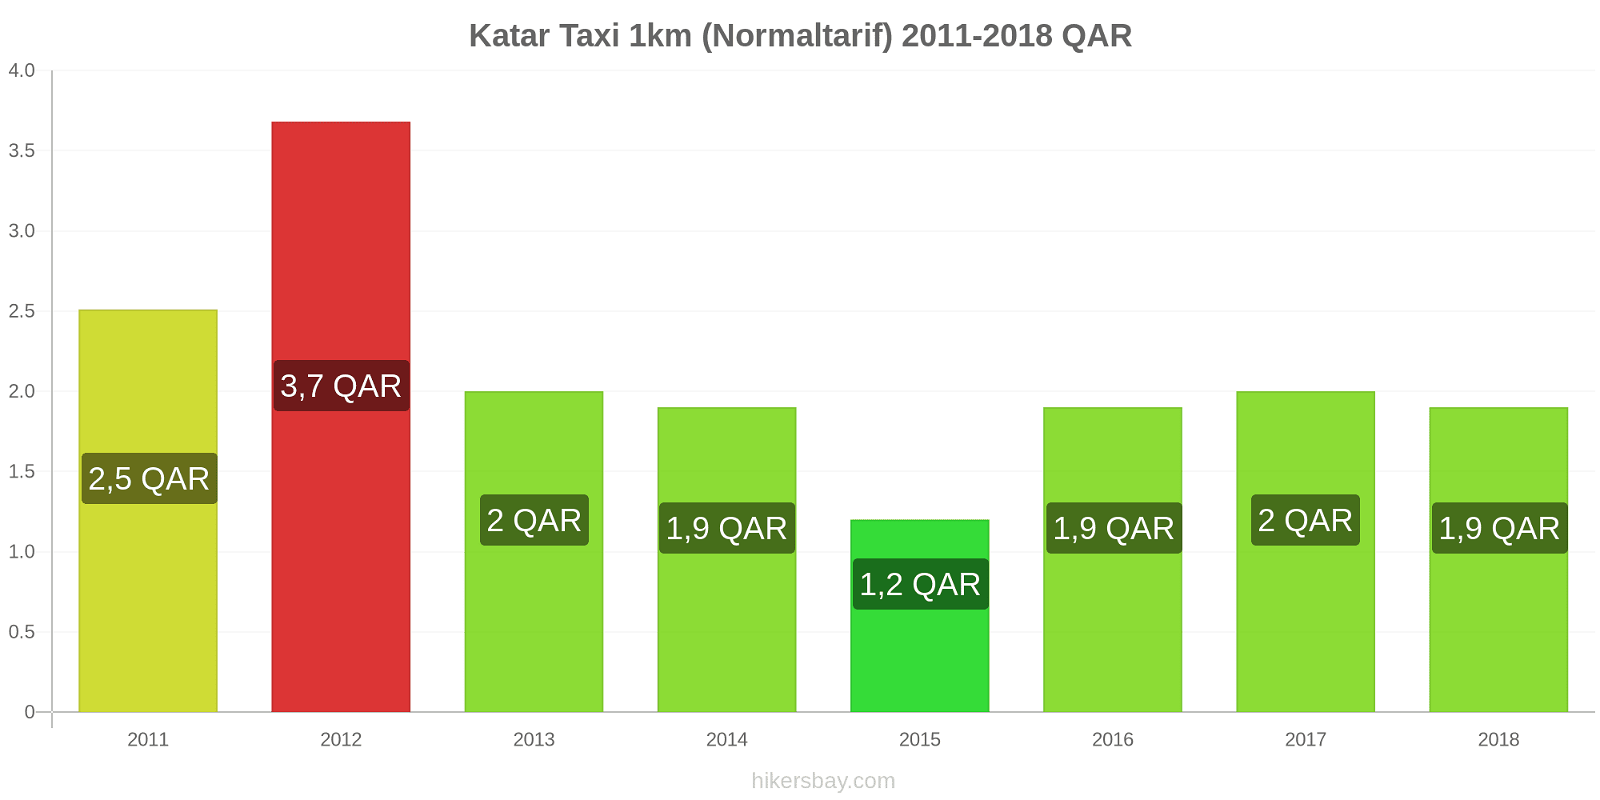 Katar Preisänderungen Taxi 1km (Normaltarif) hikersbay.com